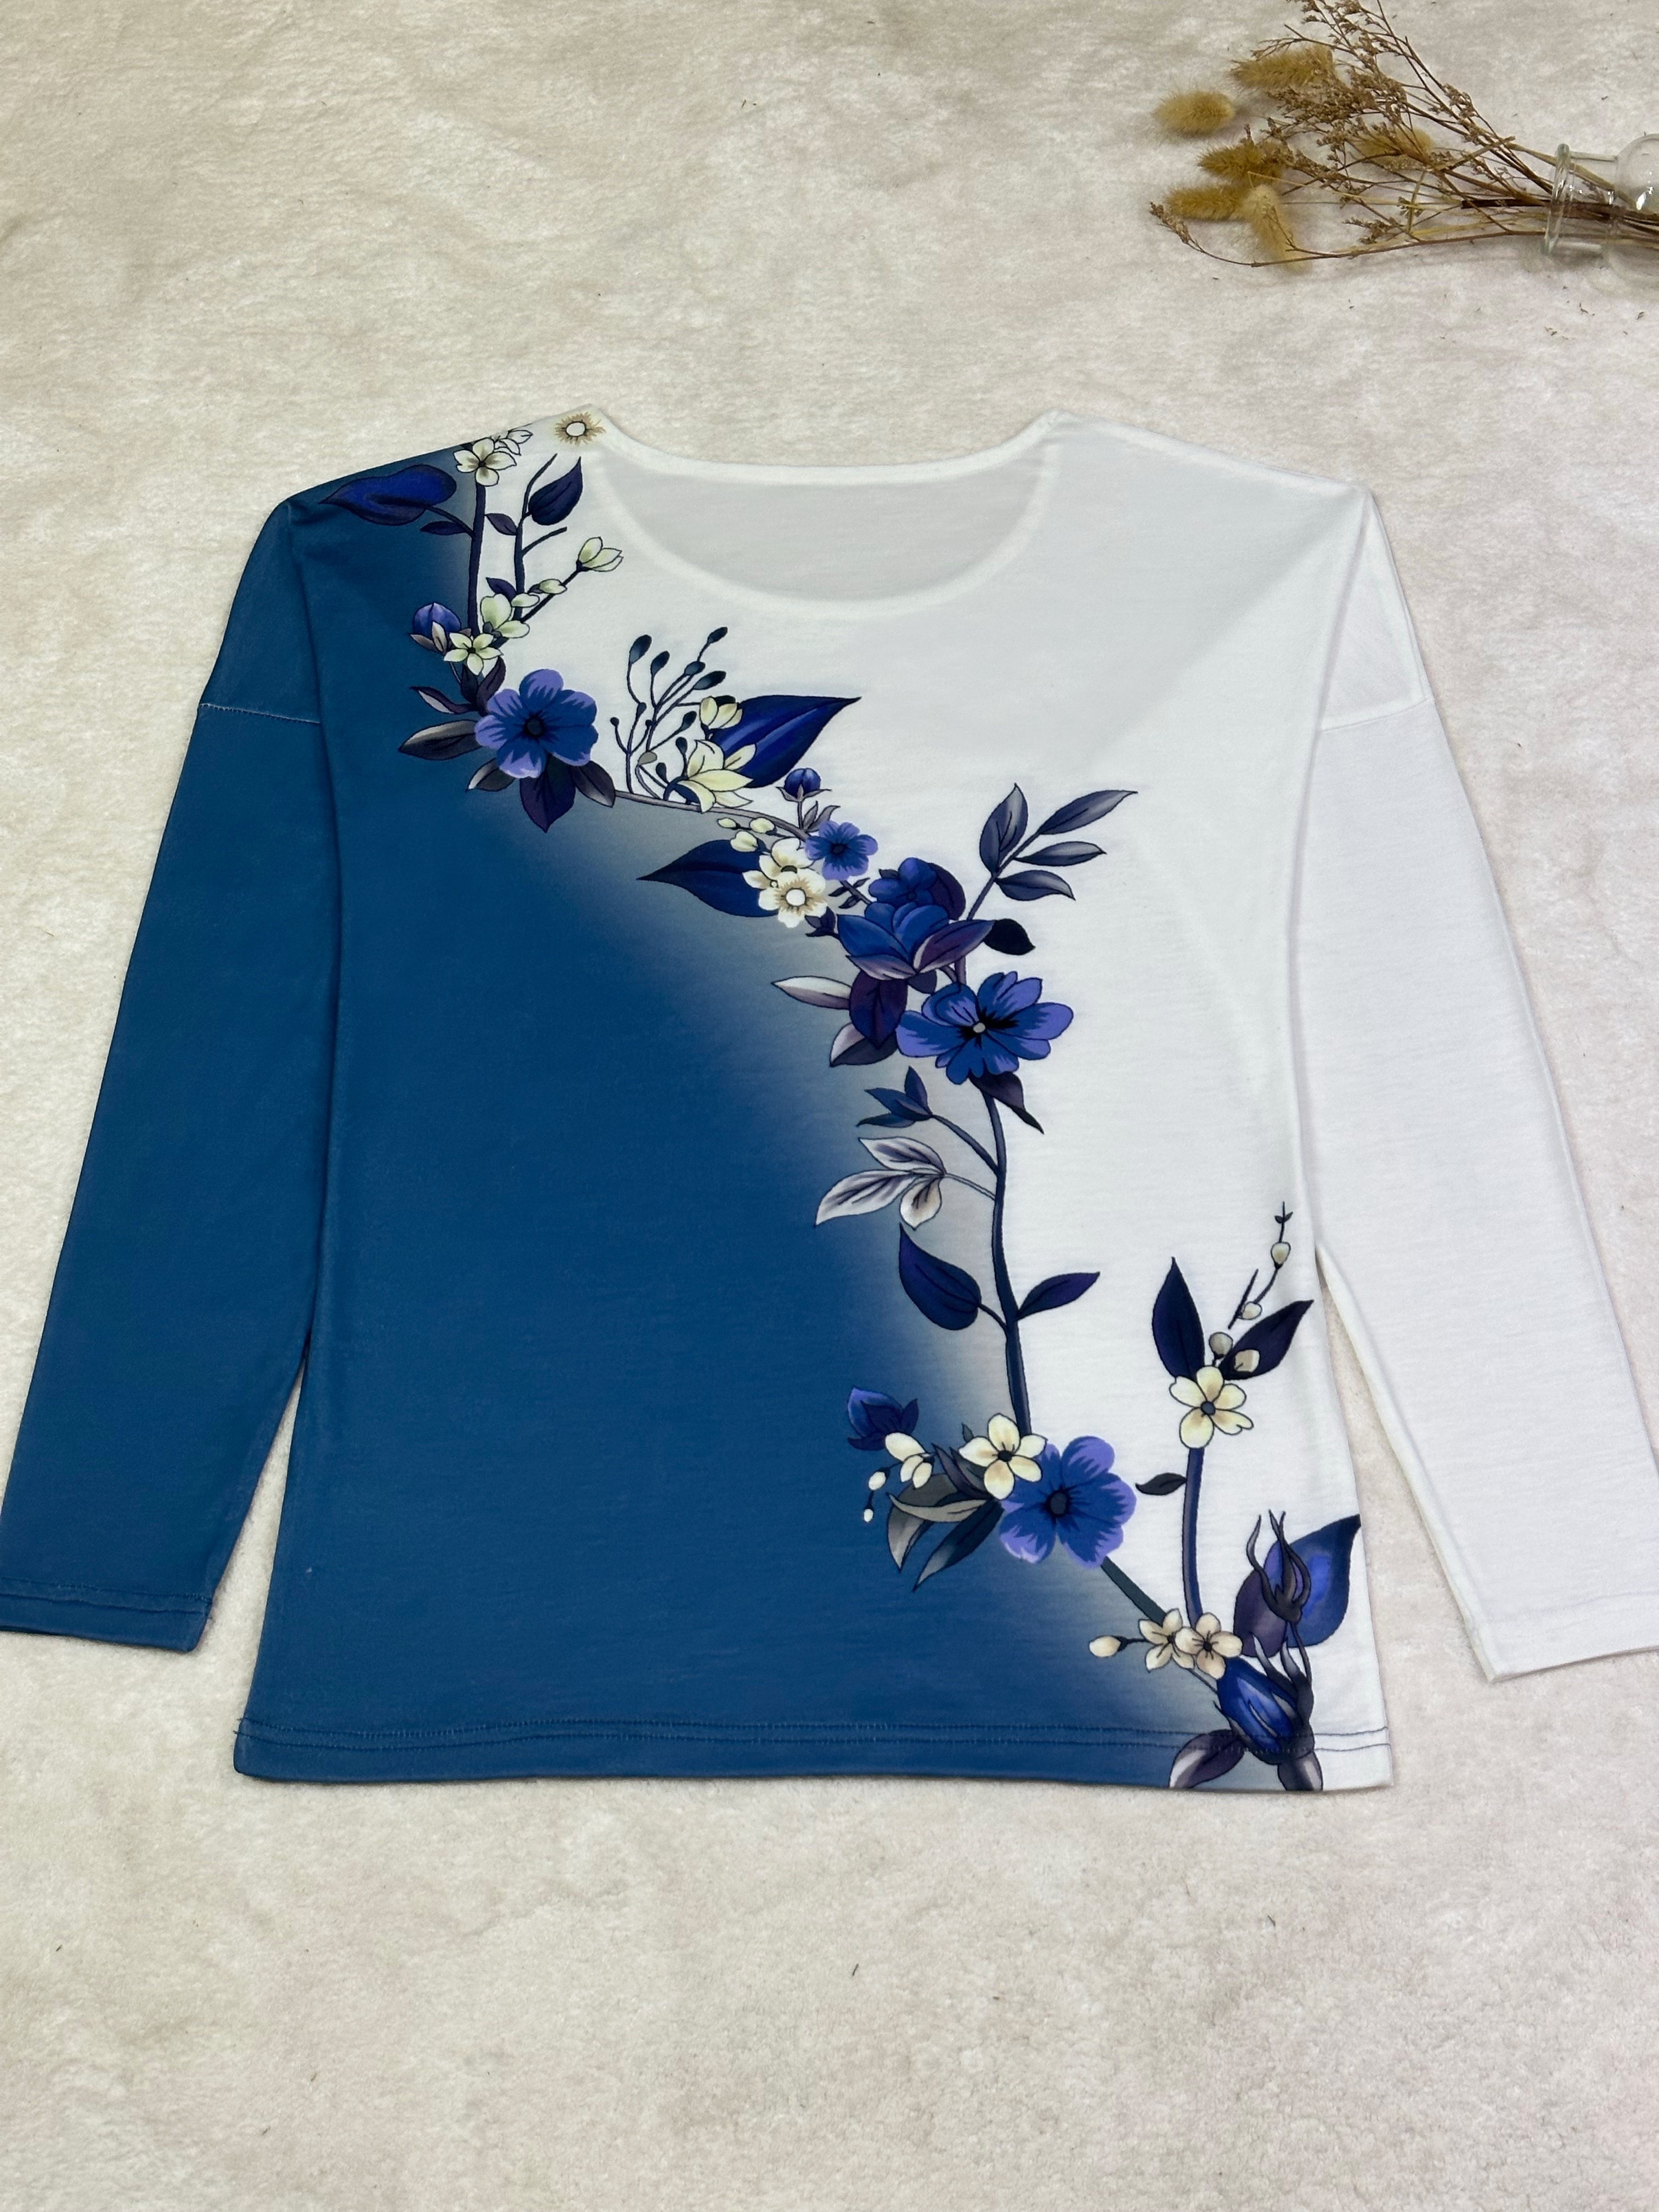 XFLWAM Womens Tops Long Sleeve Color Block Floral Shirt Casual